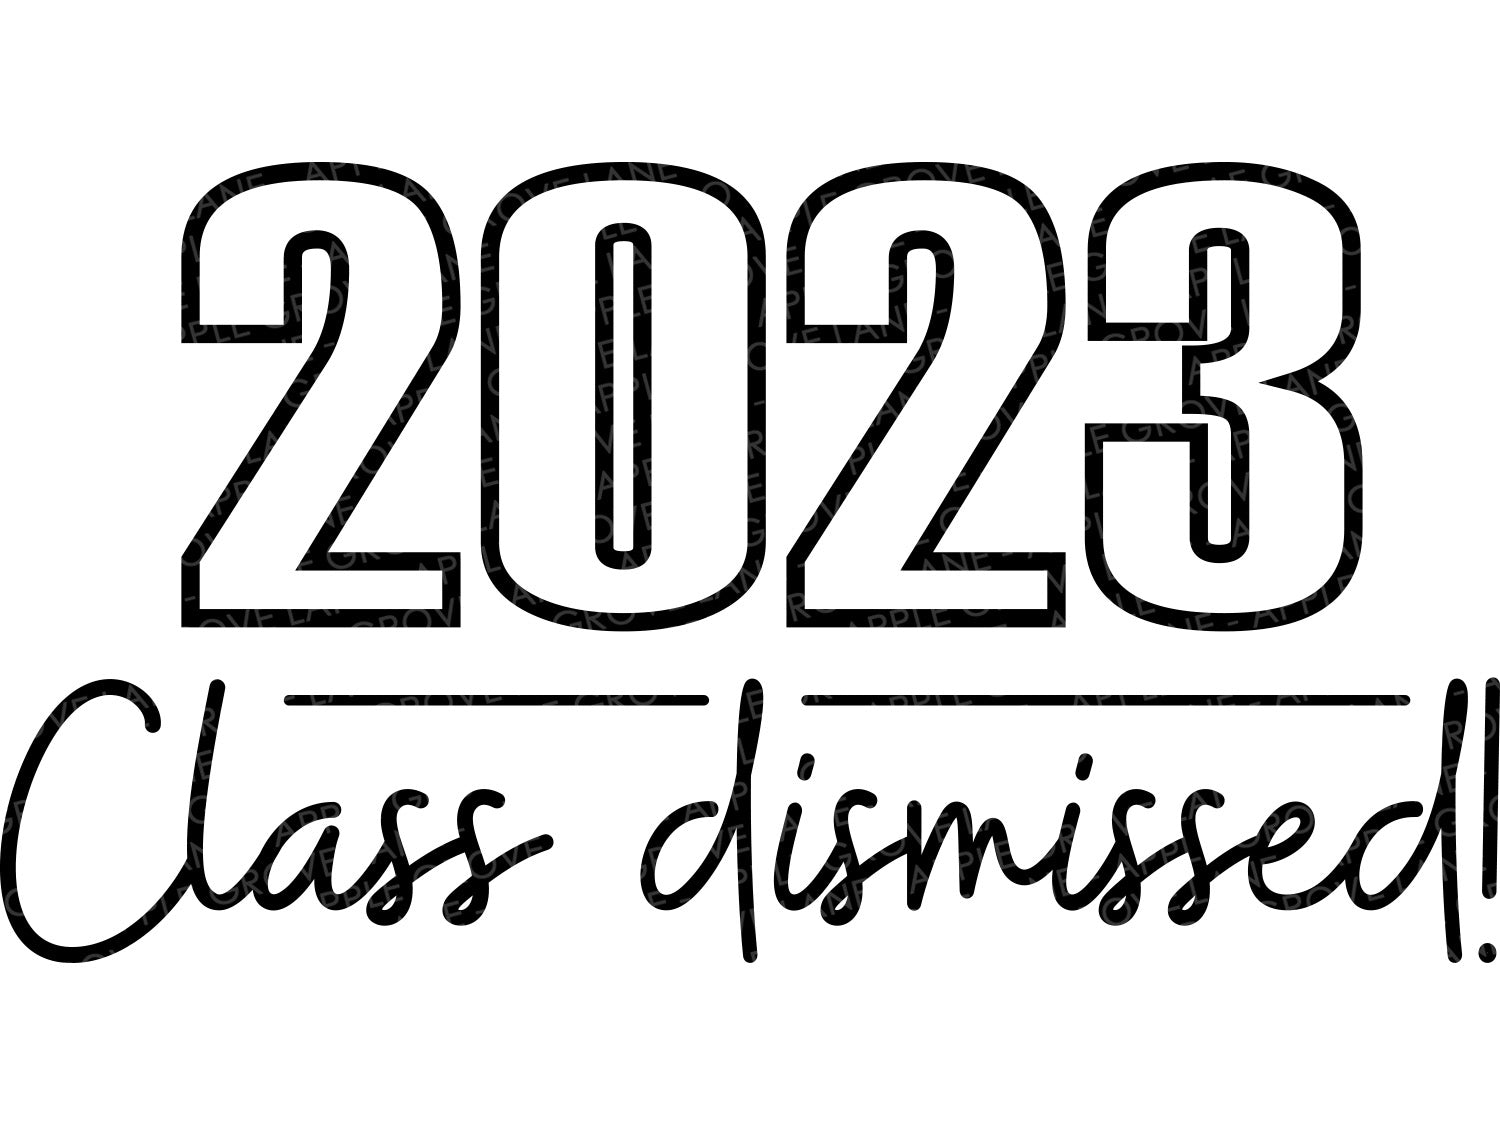 Class of 2023 Svg - Class Dismissed Svg - Graduation SVG - 2023 Svg - 2023 Senior SVG - Graduation 2023 Svg - Class of 2023 Shirt - 2023 Png